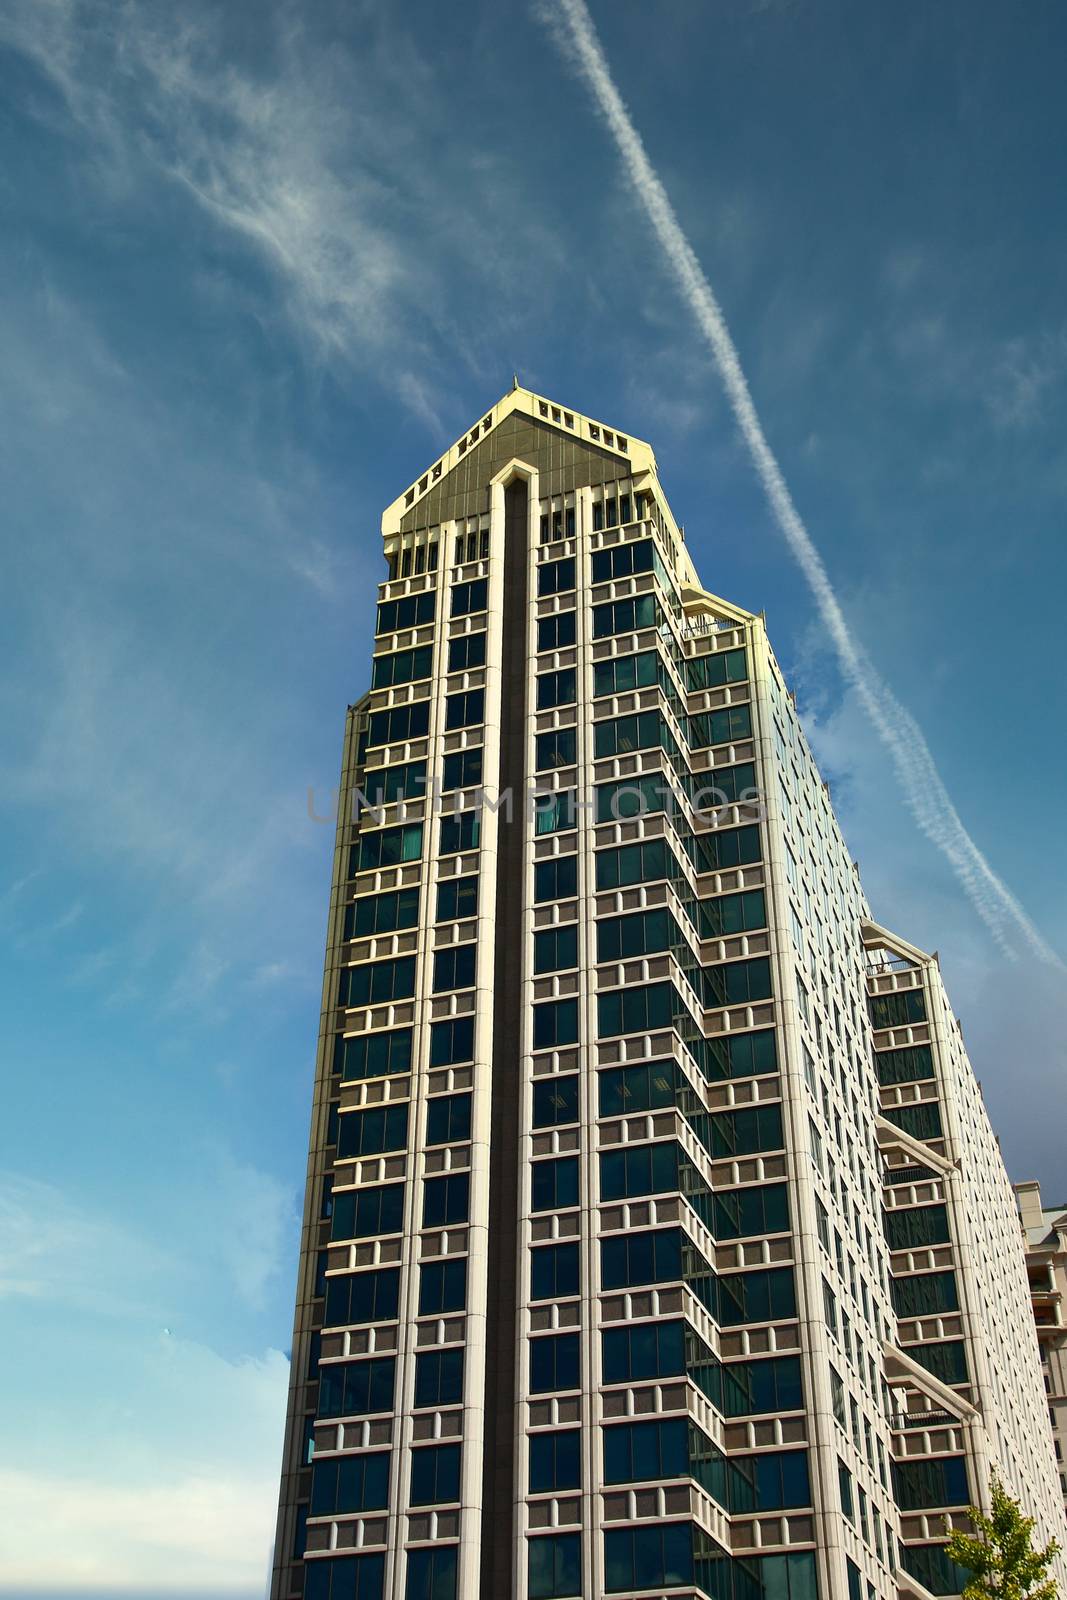 A modern high rise condominium building under nice blue skies